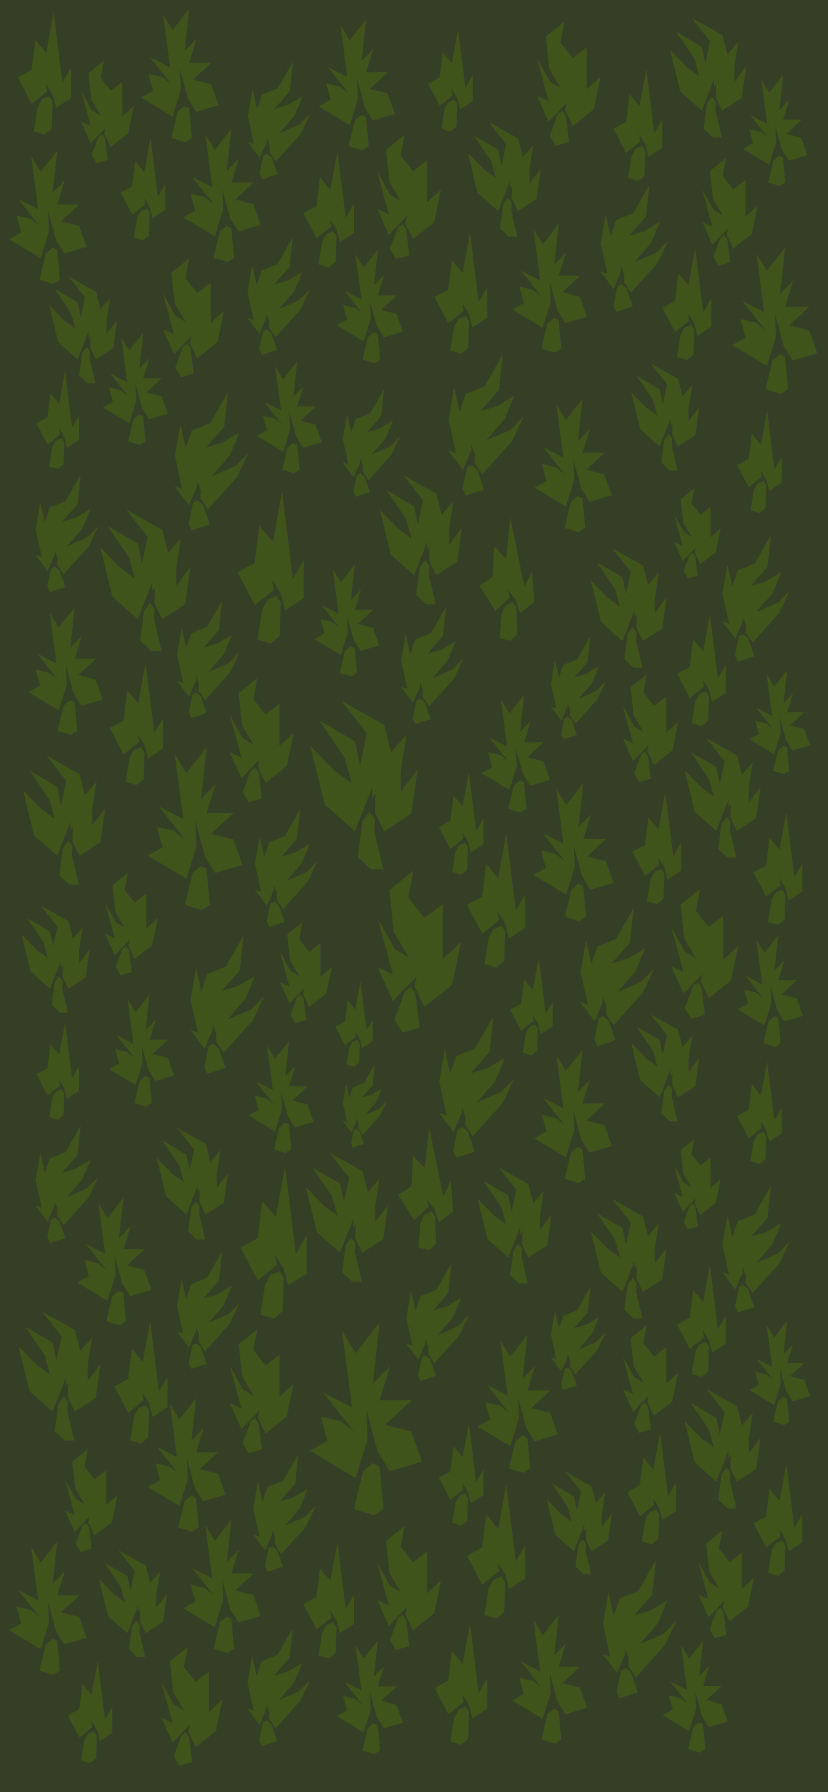 Phone wallpaper of trees pattern